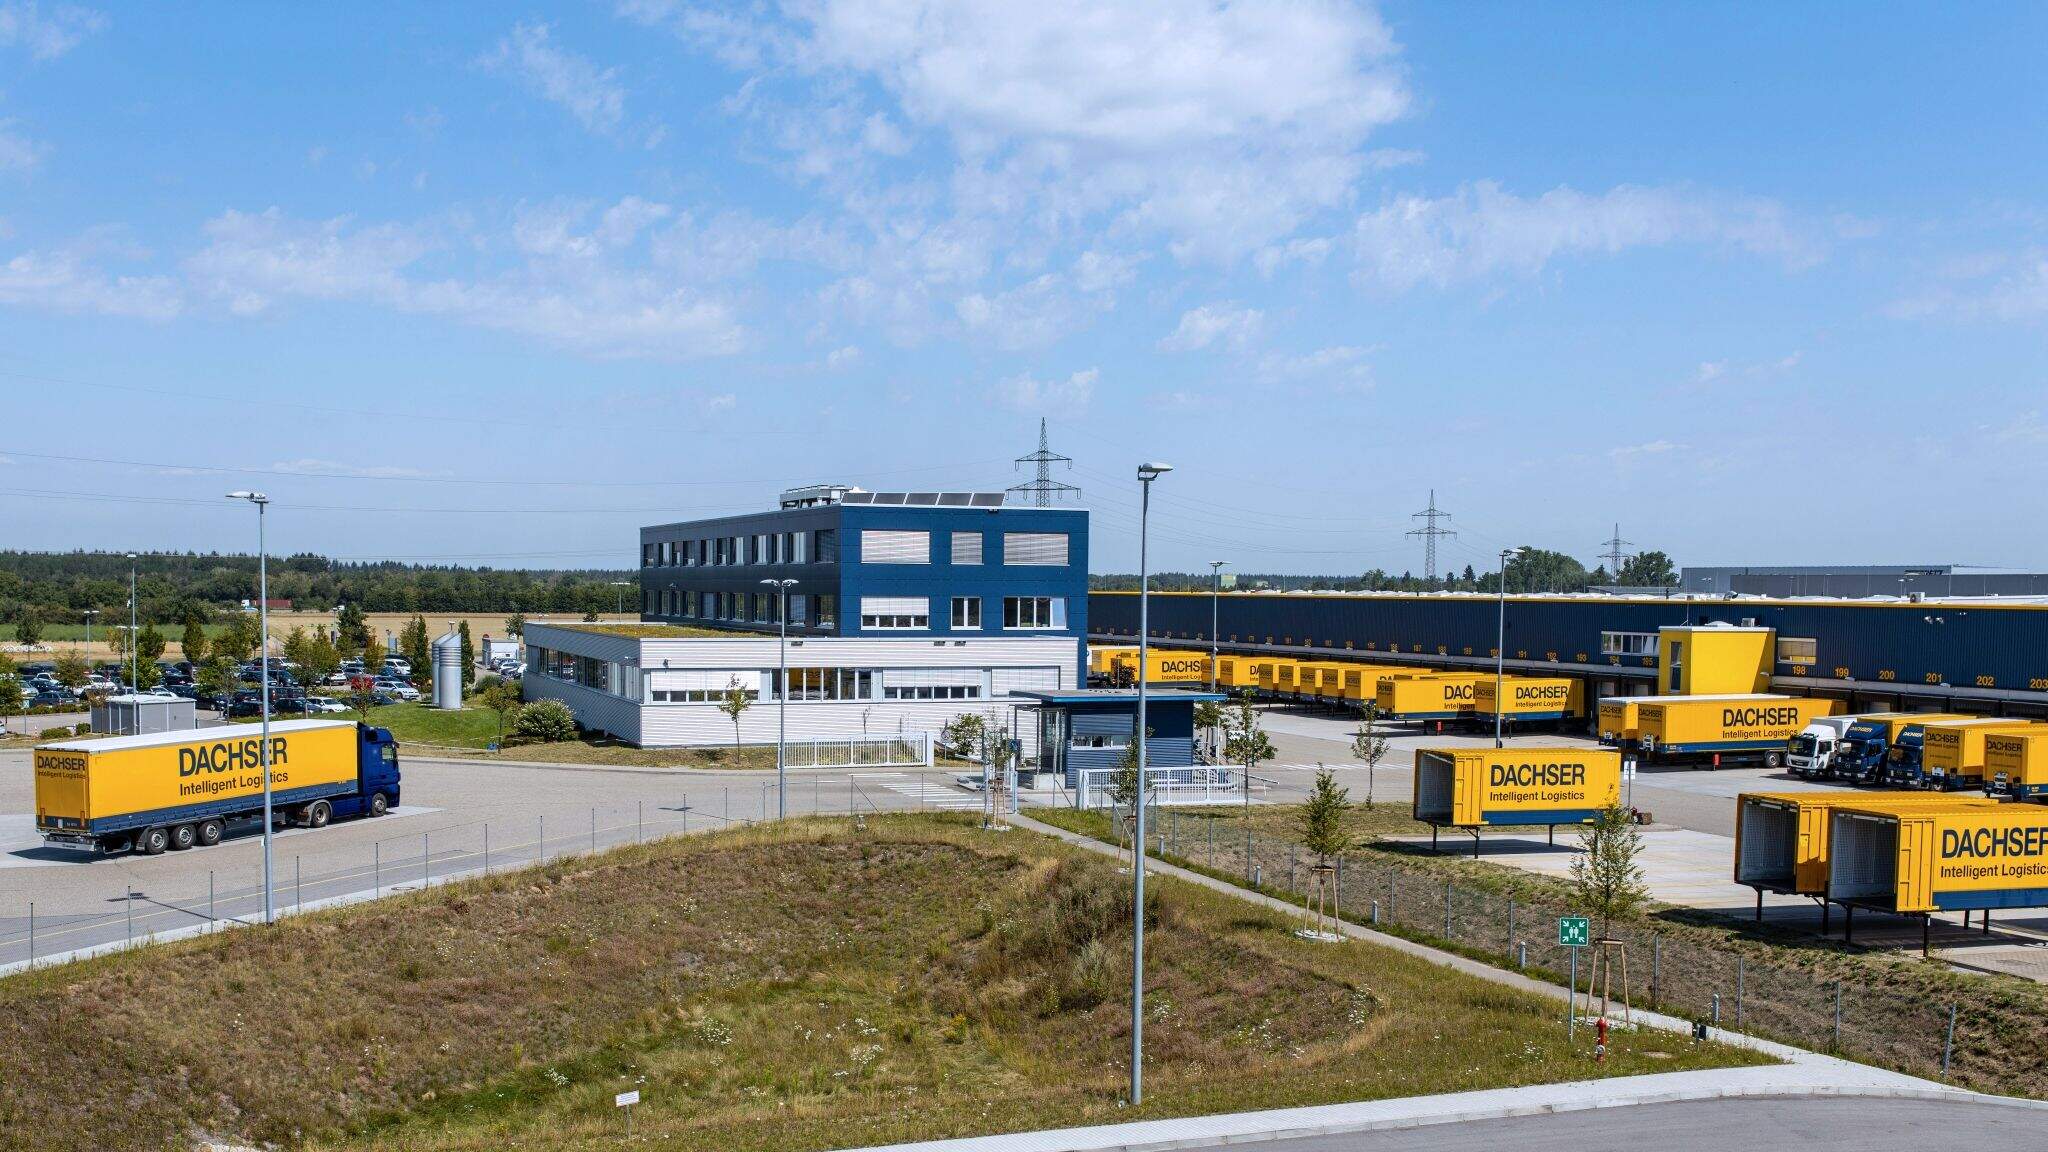 CML's shipment arrives at DACHSER's Logistics Center Karlsruhe